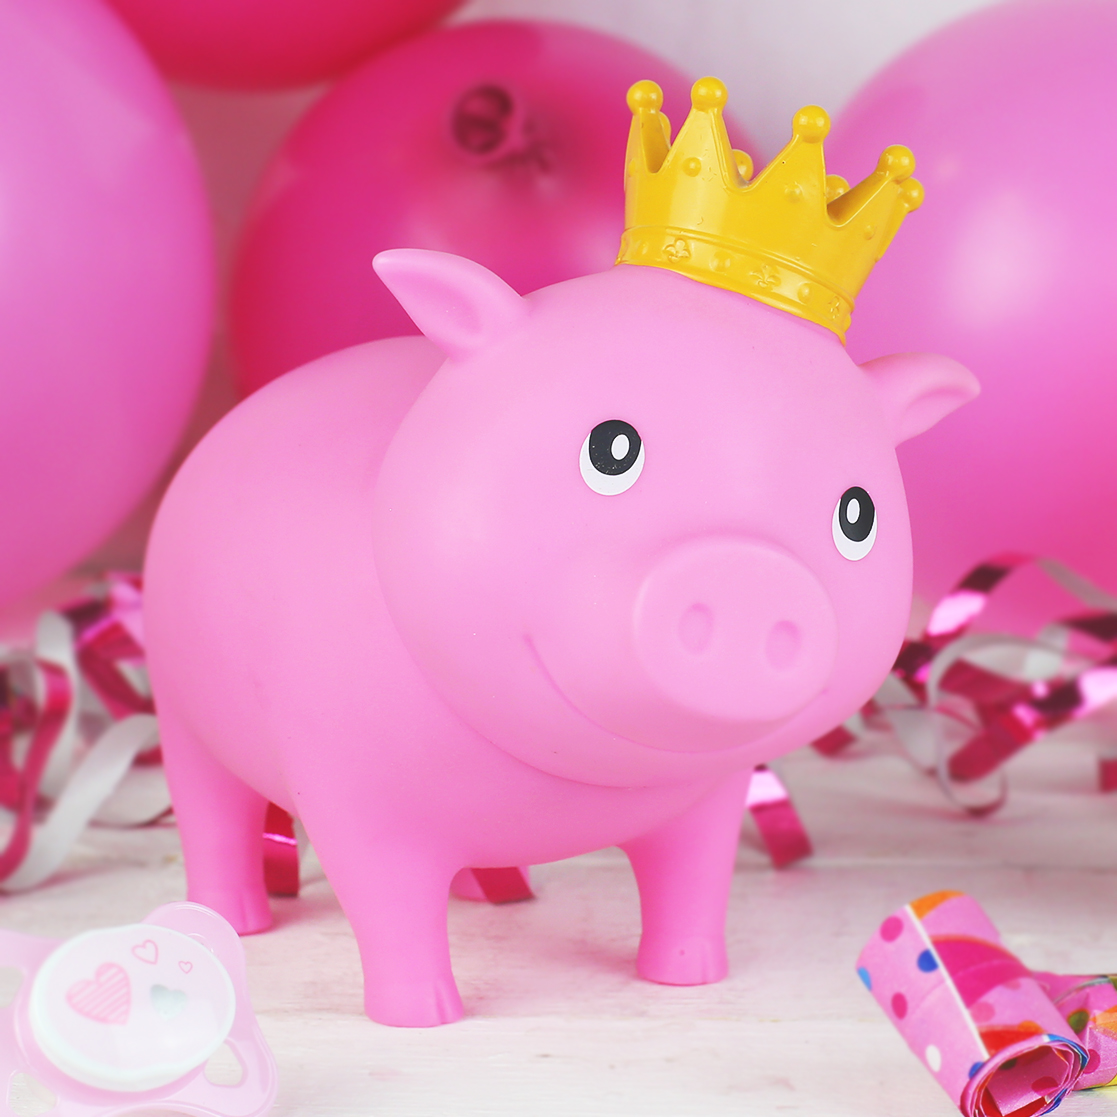 BABY GIRL PINK MONEY BOX GIFT STARS HEART NEW BORN SAVINGS FUNDS PIGGY BANK 